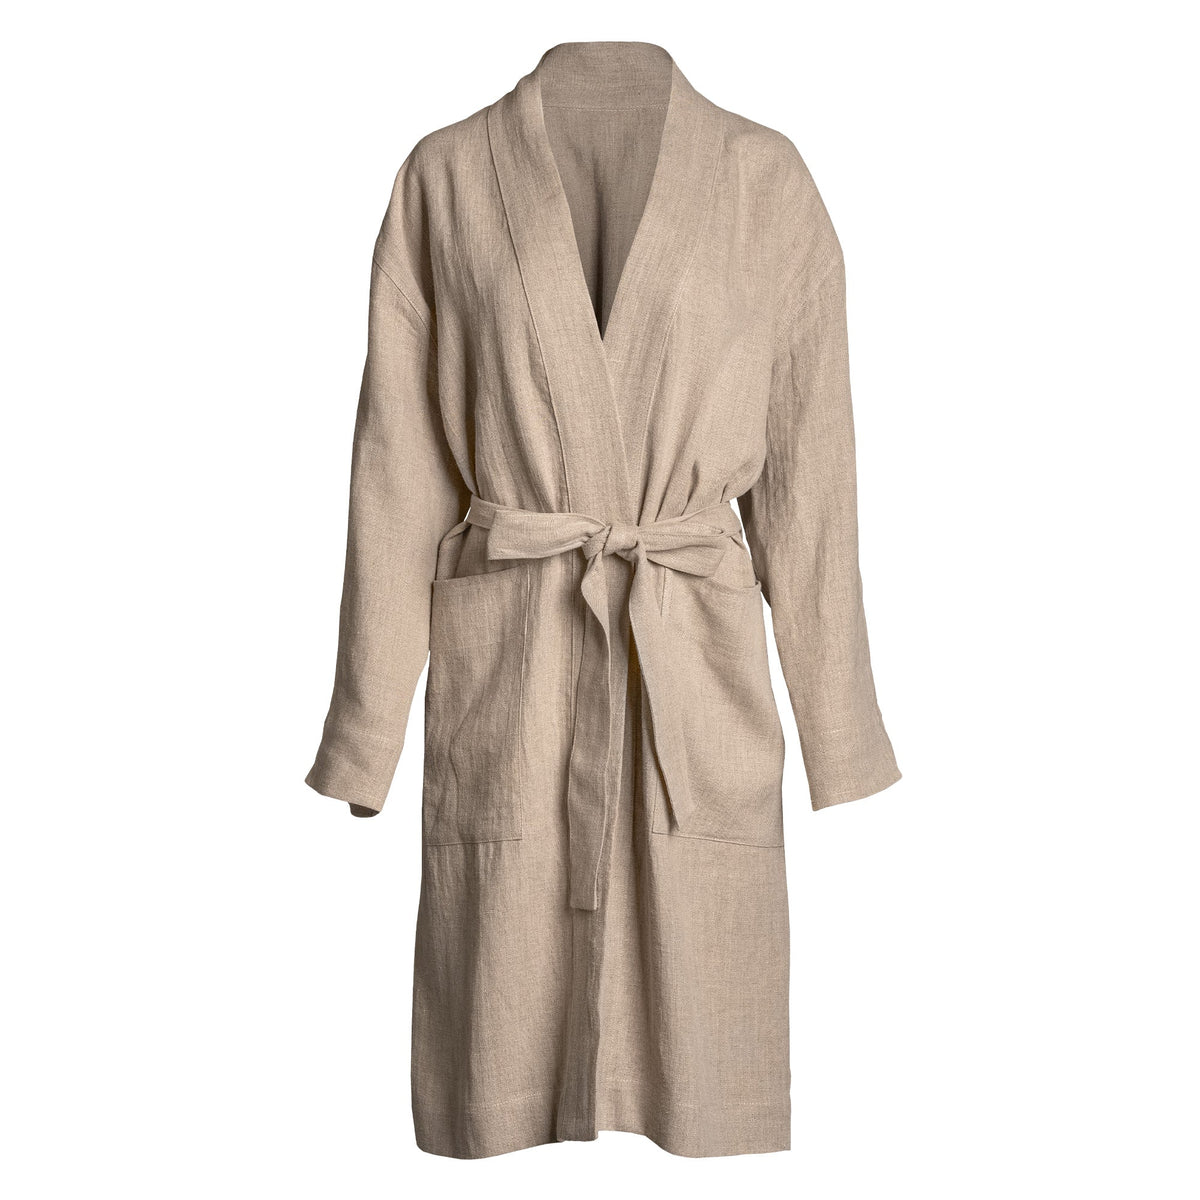 MENIQUE Women's 100% Linen Bath Robe